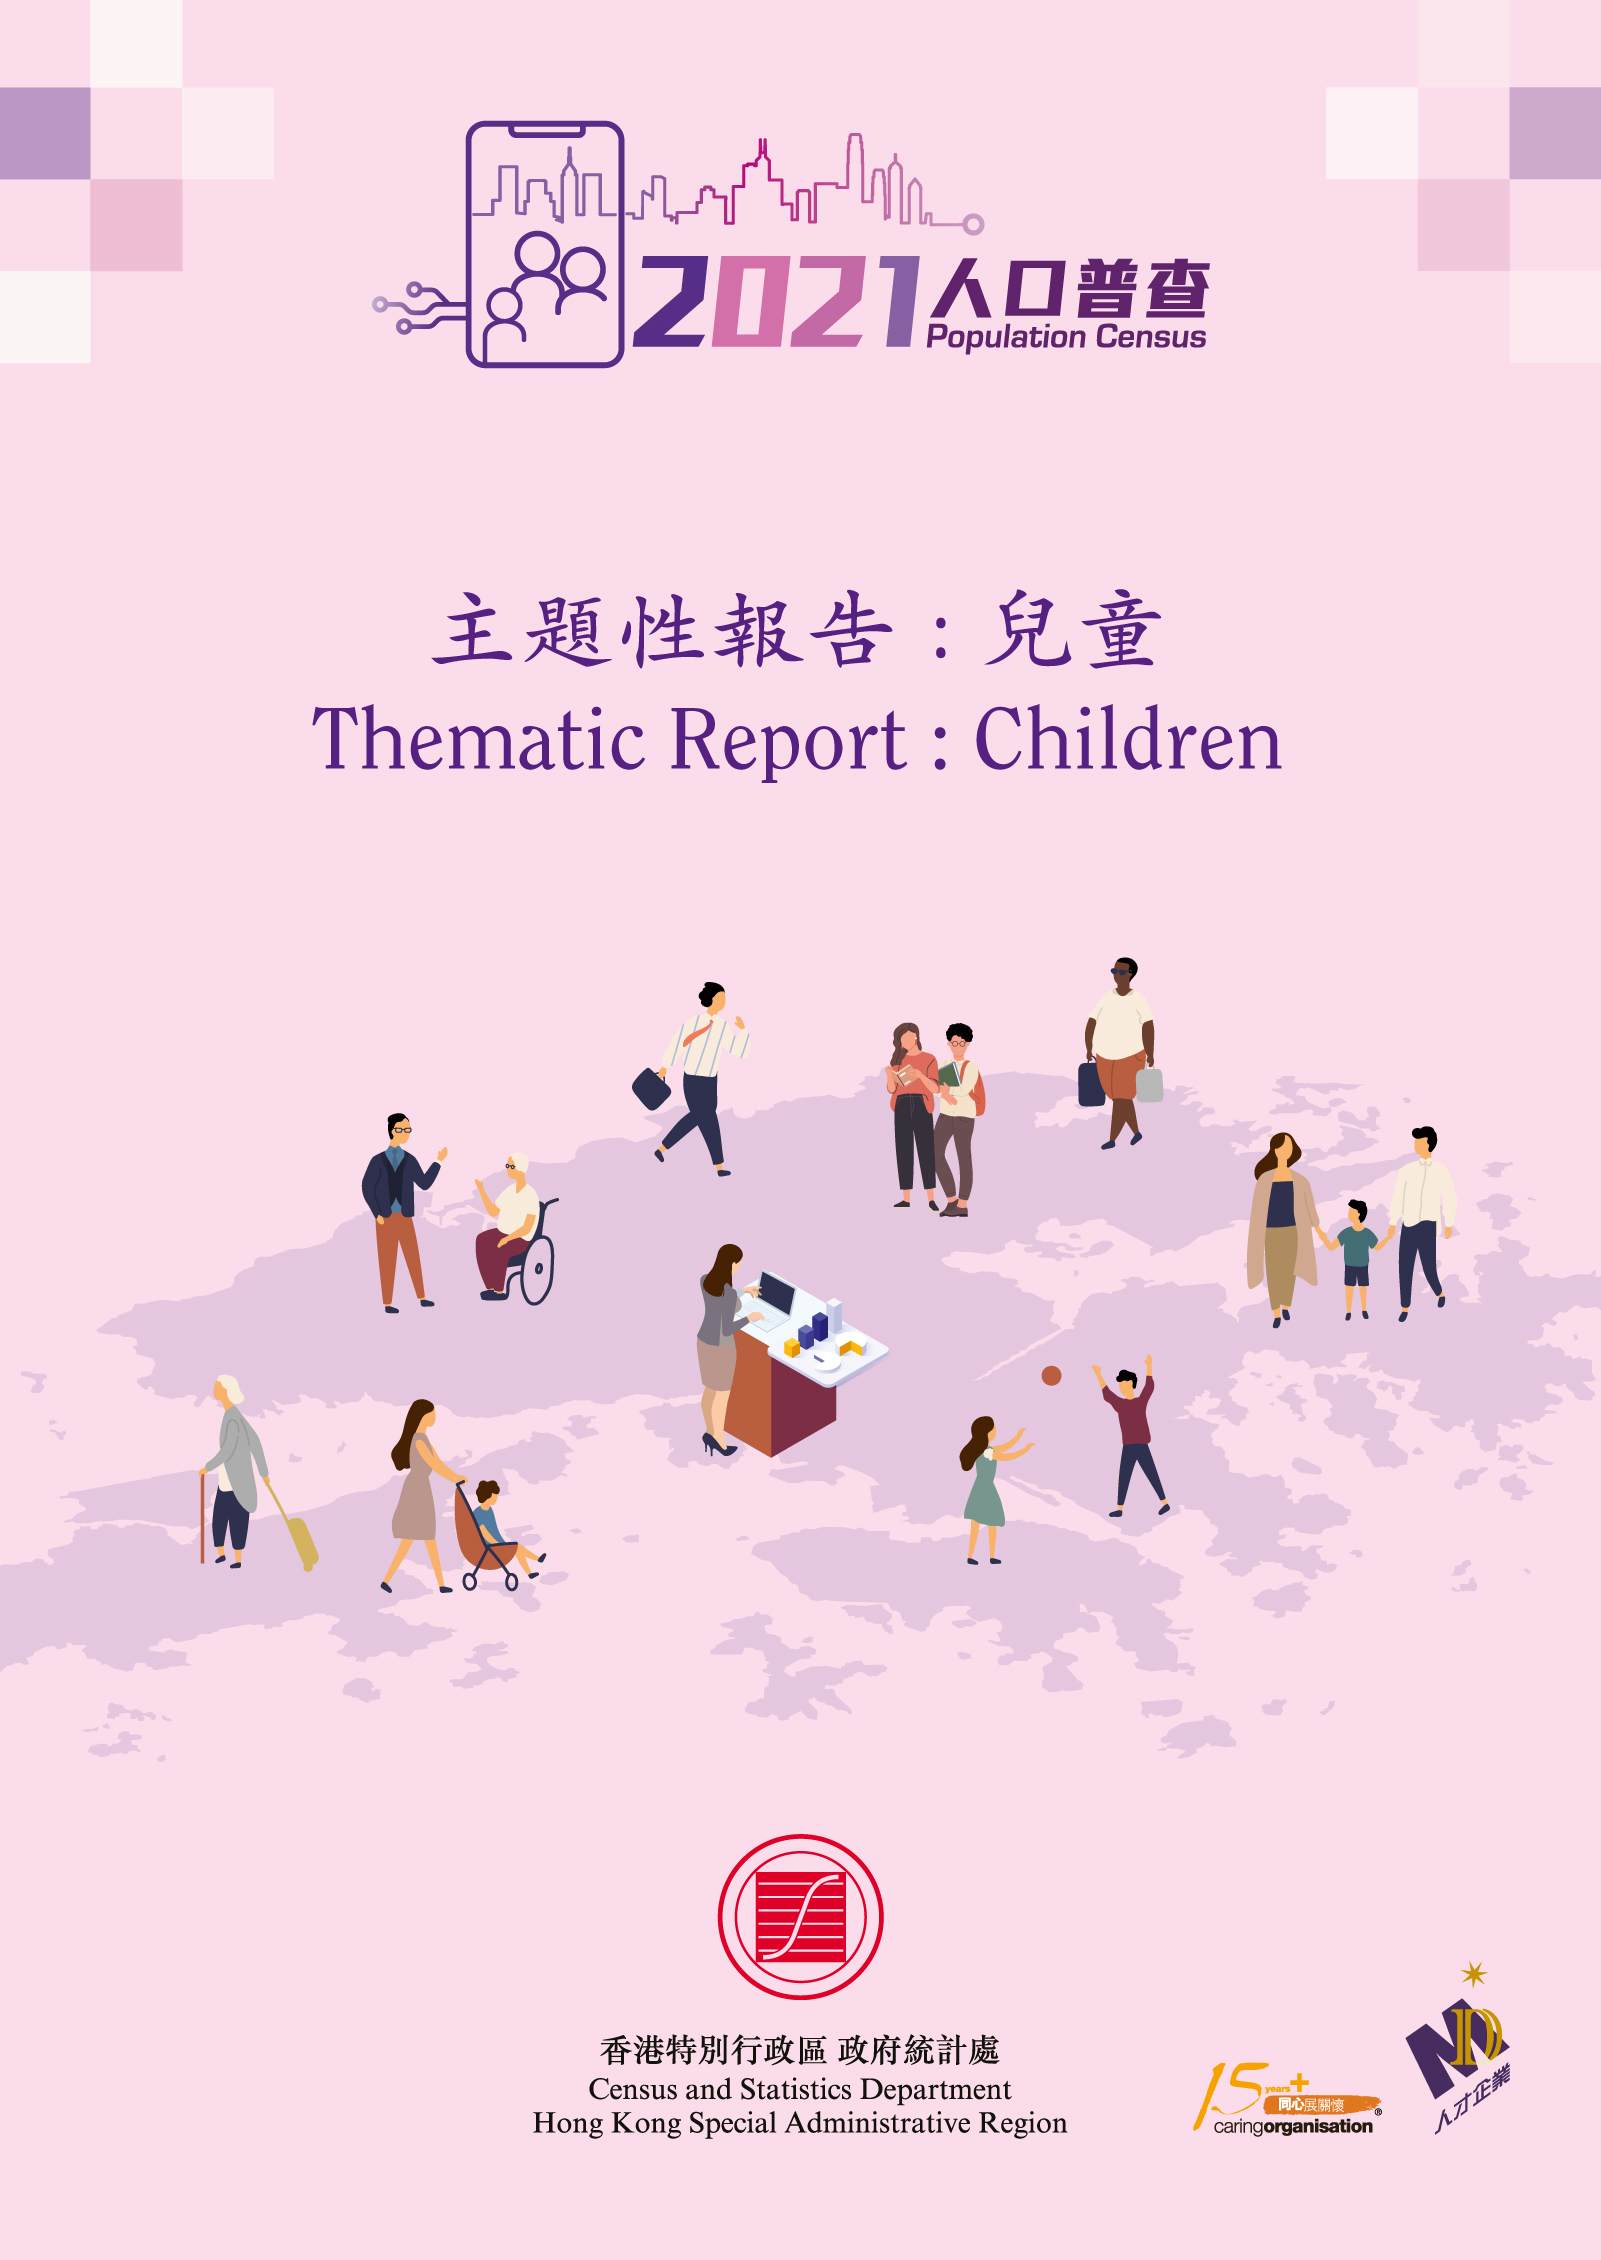 Thematic Report: Children